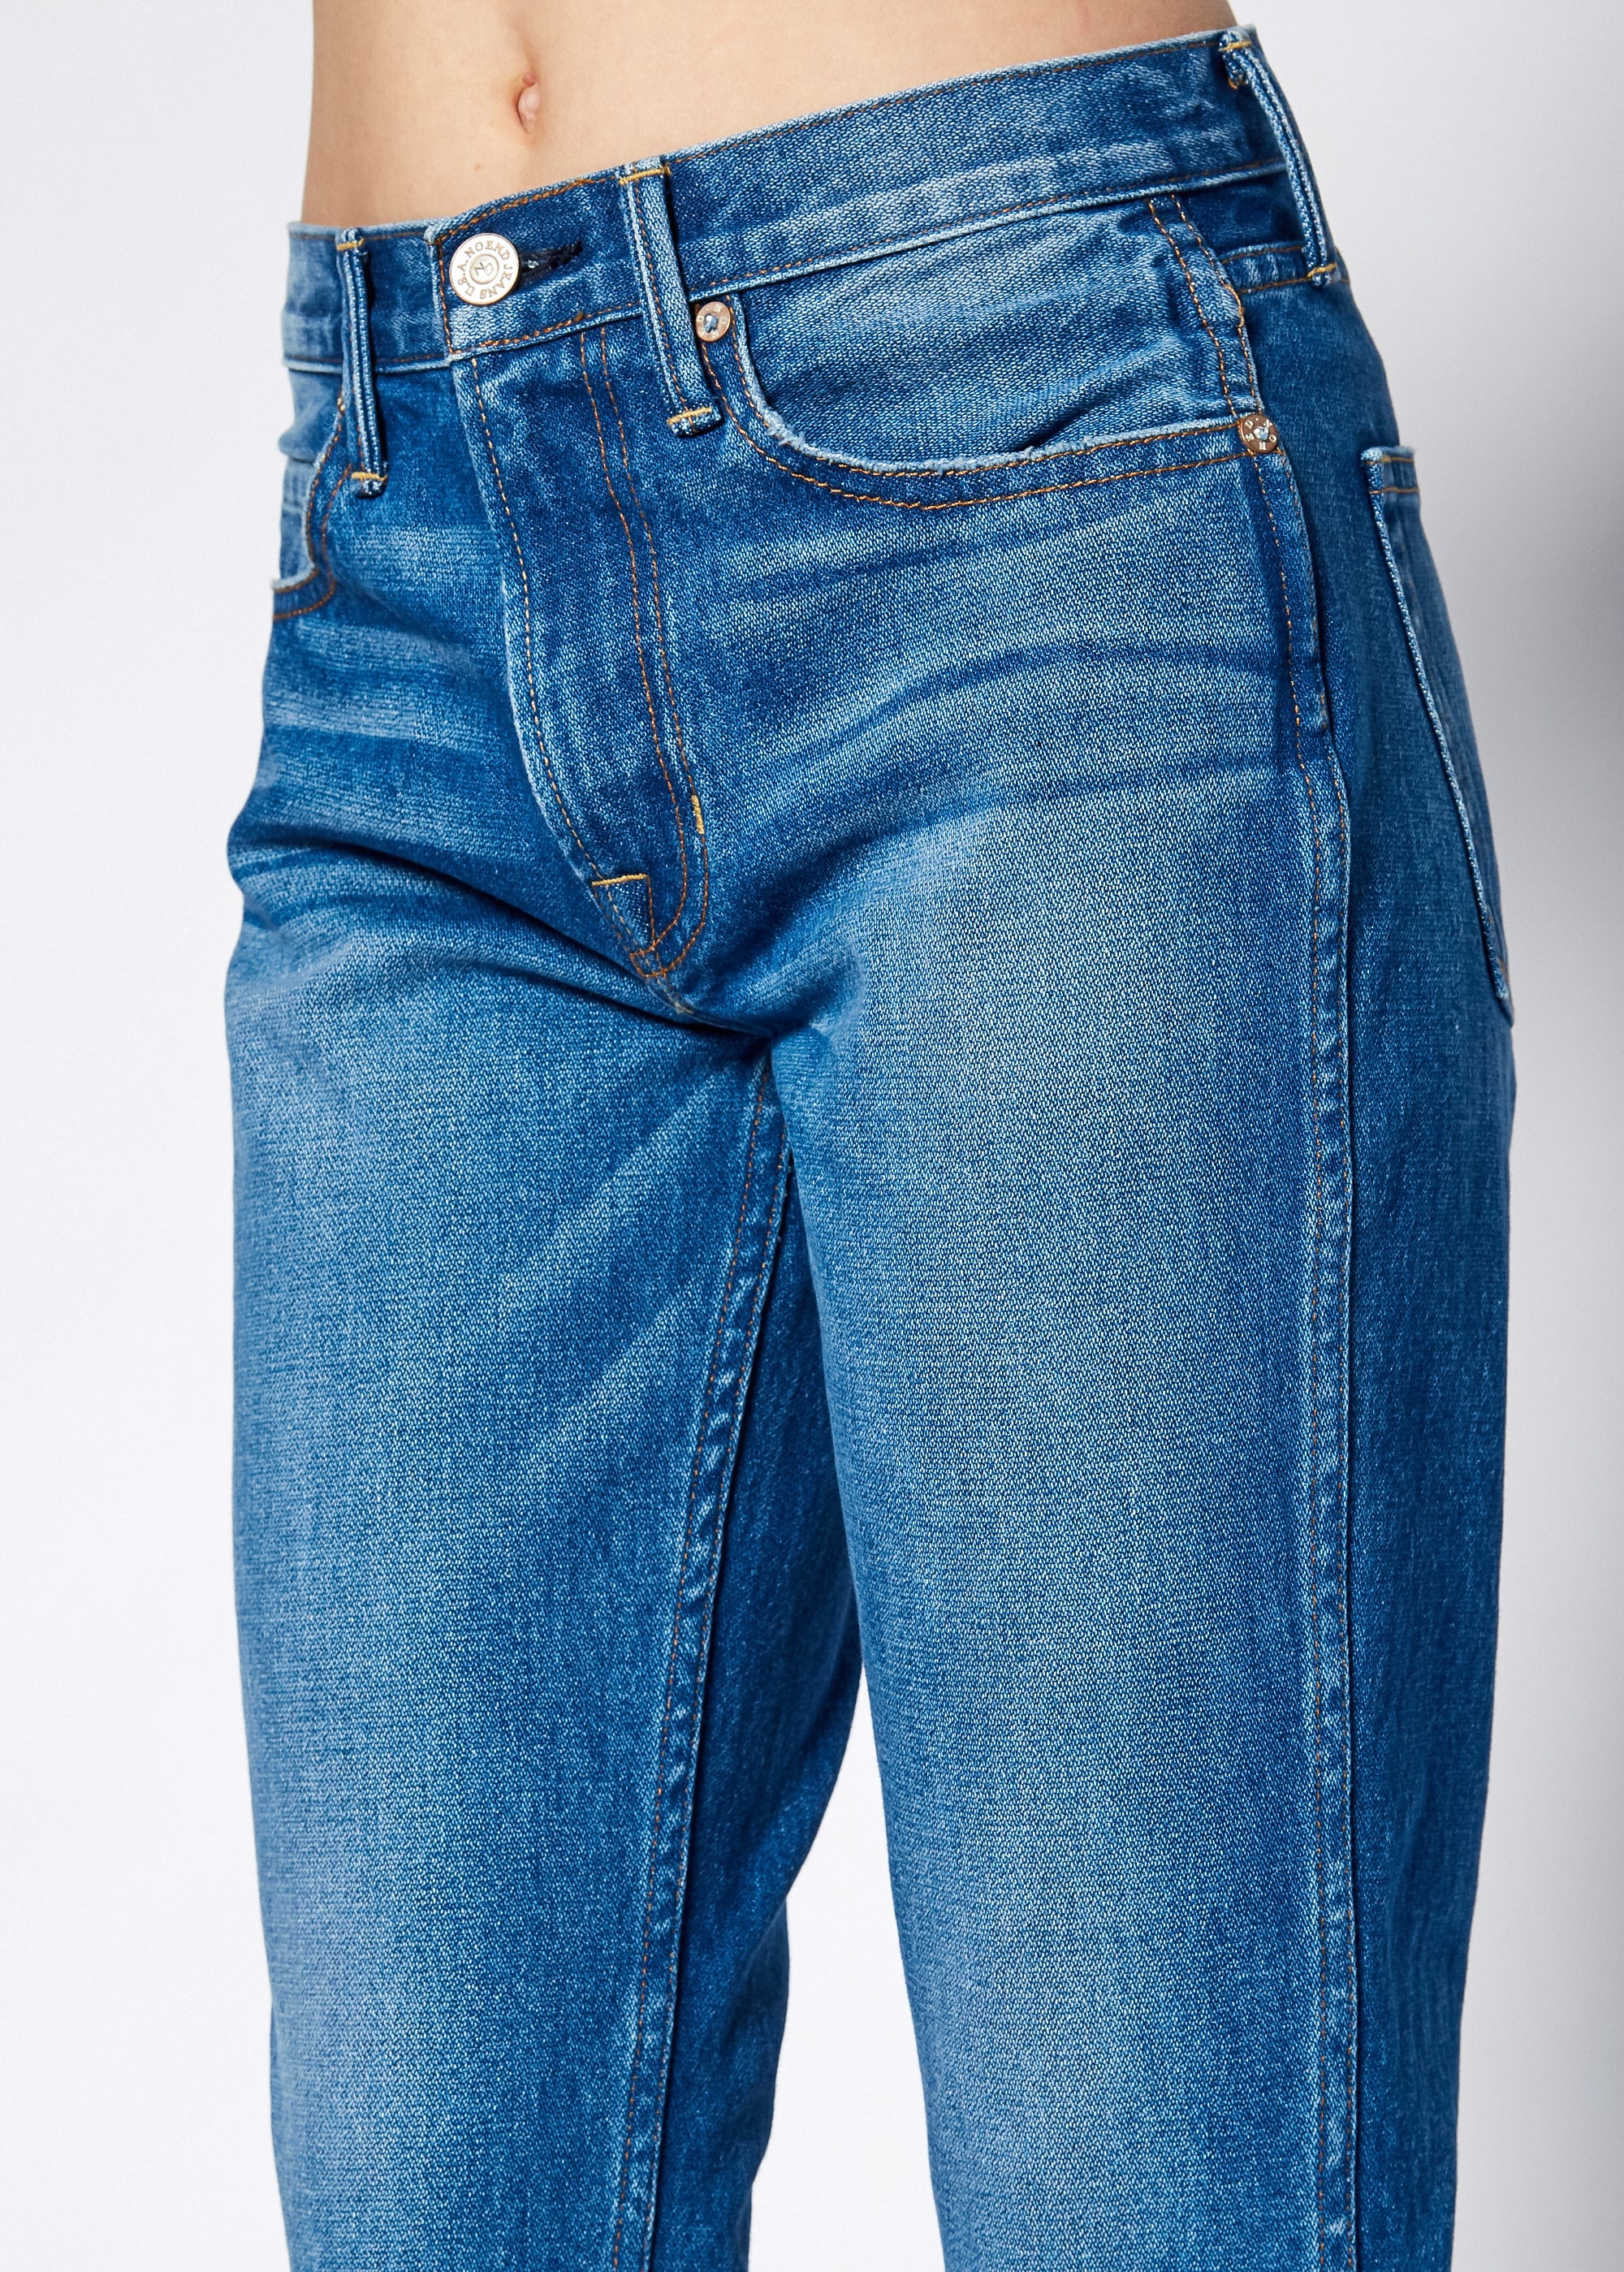 Farrah Kick Flare Jeans in Wisconsin - Noend Denim